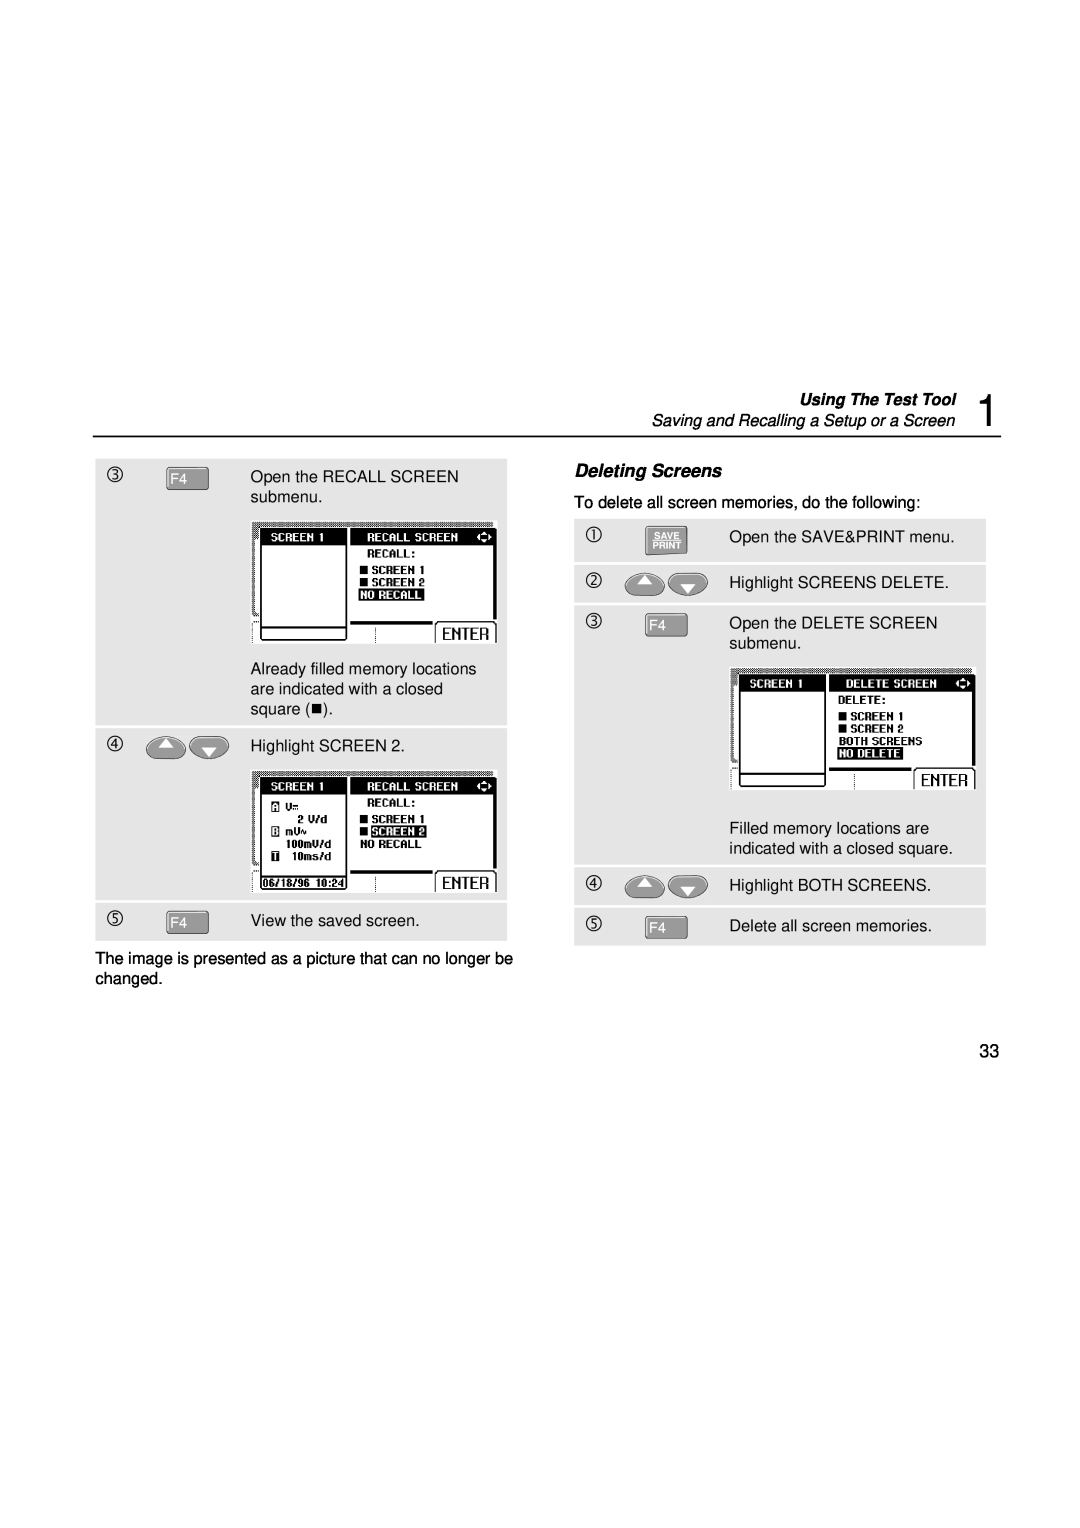 Fluke fluke123 user manual Deleting Screens, Saving and Recalling a Setup or a Screen, Using The Test Tool 